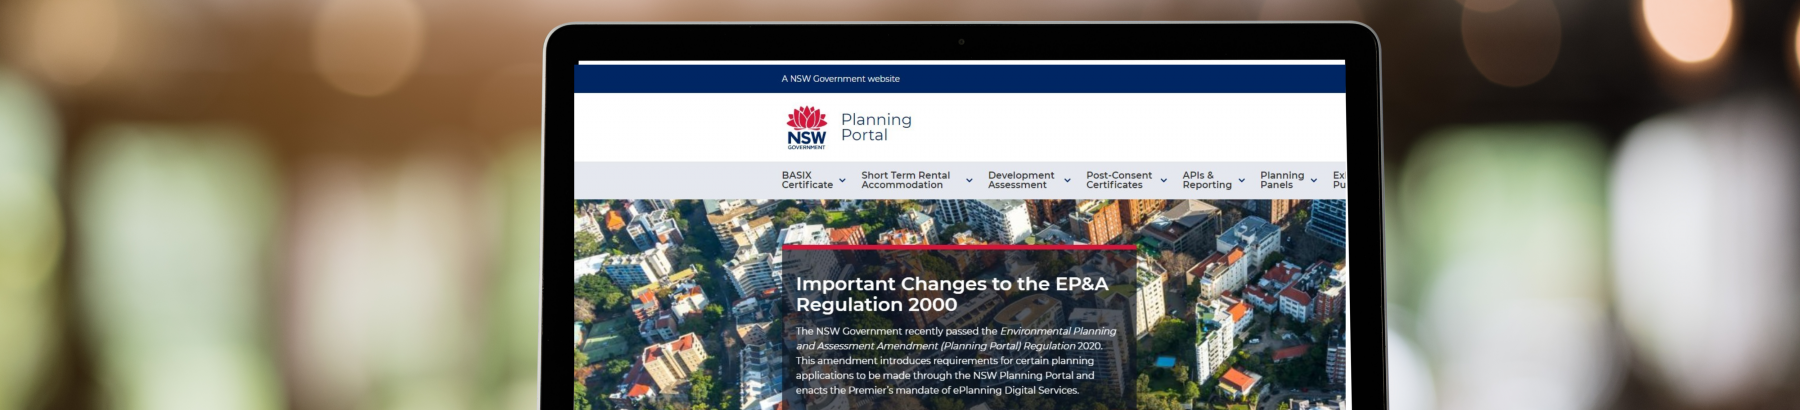 NSW Online Planning Portal Computer